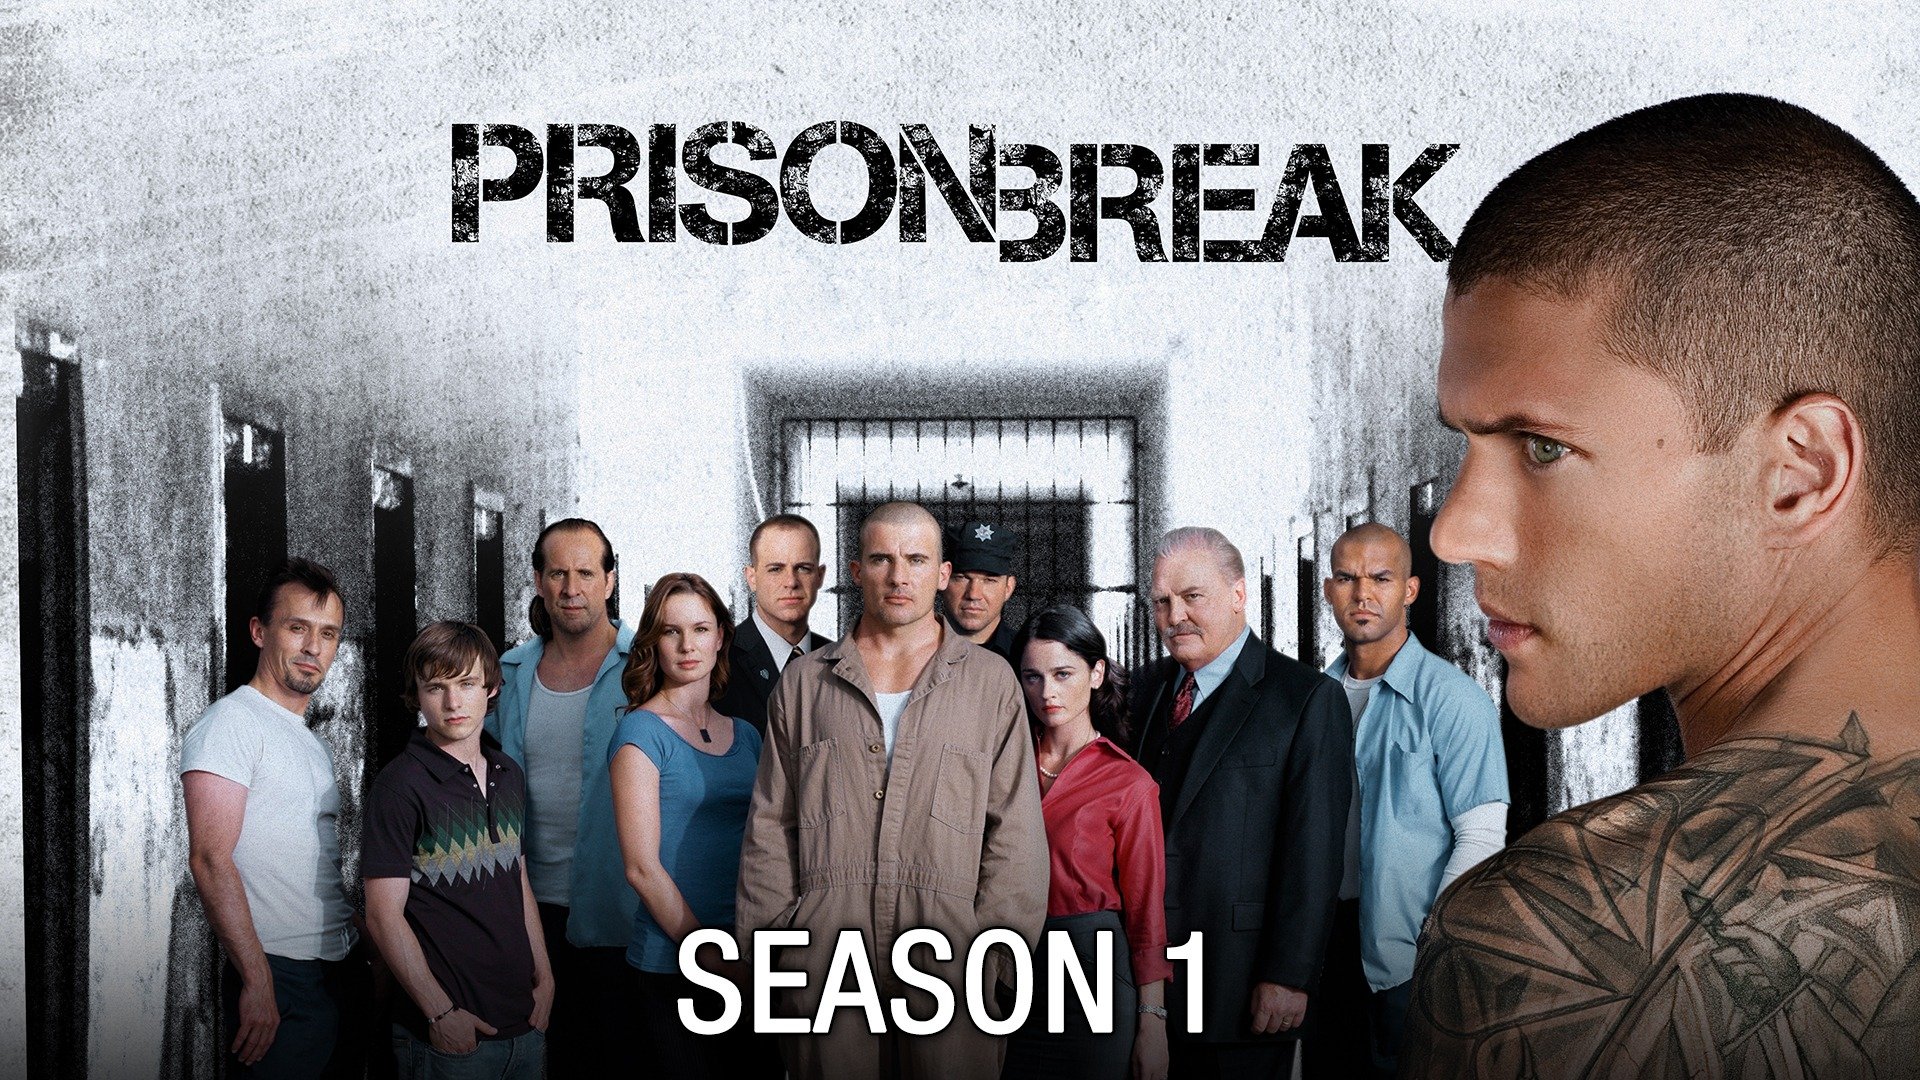 prison break season 5 download 480p